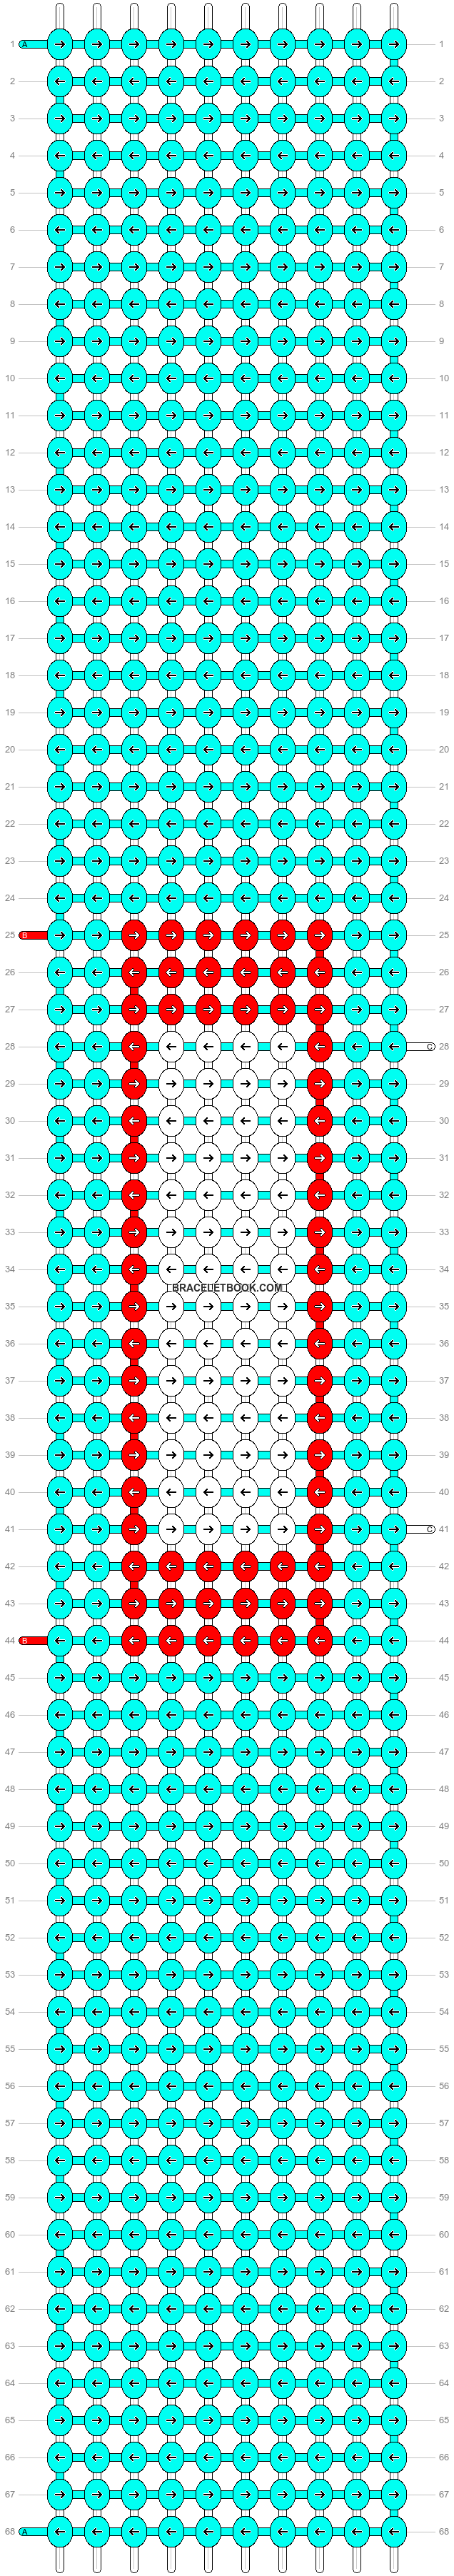 Alpha pattern #82793 pattern